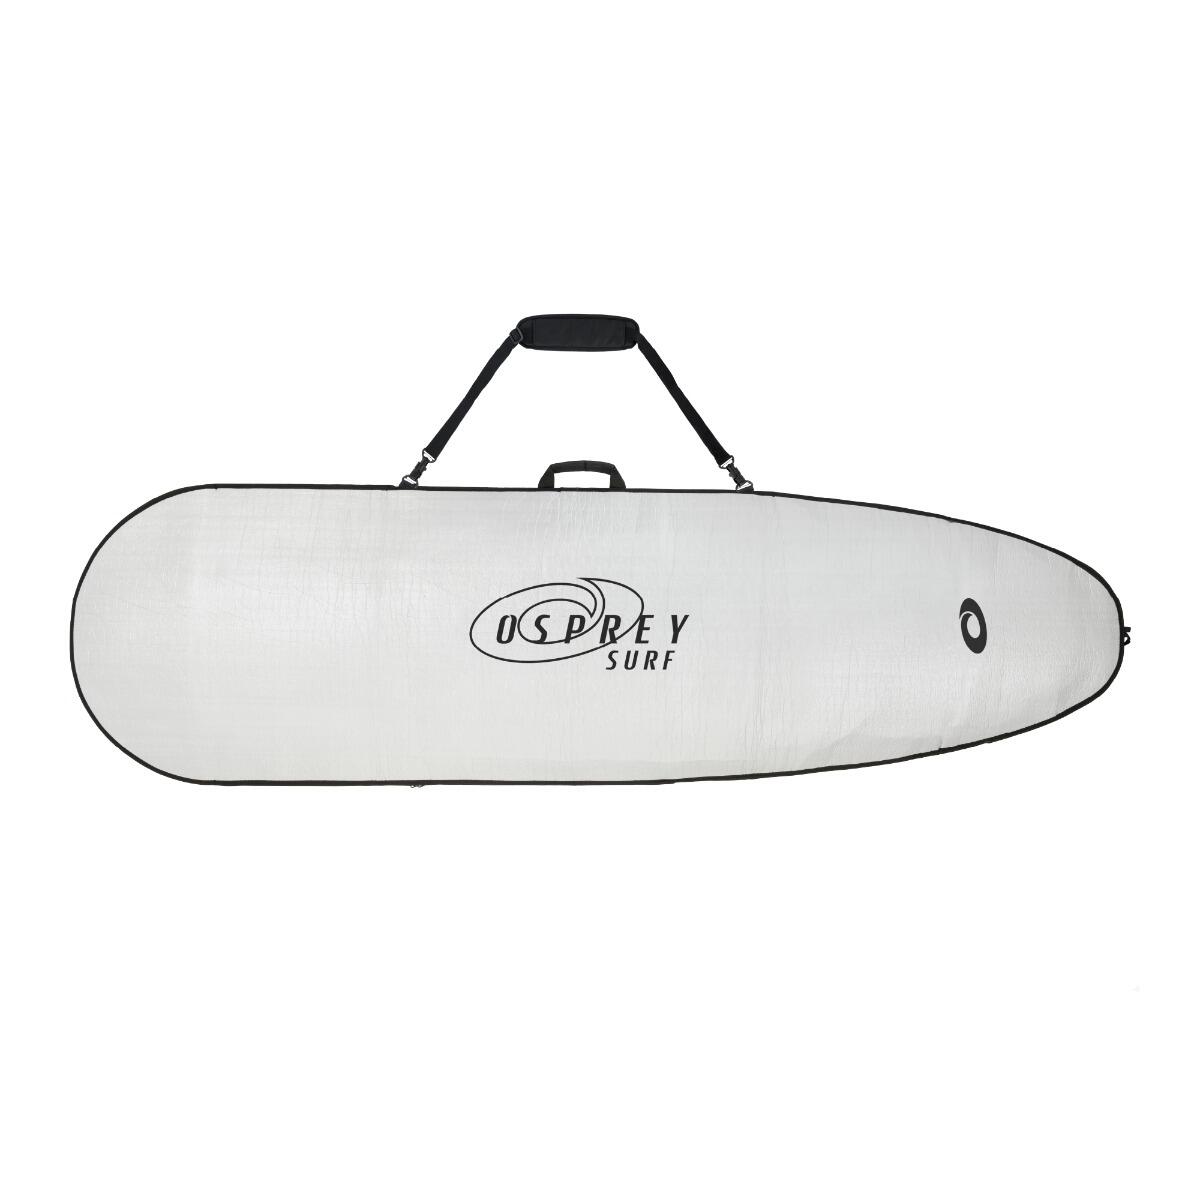 OSPREY ACTION SPORTS Osprey Surfboard Bag, Portable Protective Travel Bag for Surfboards